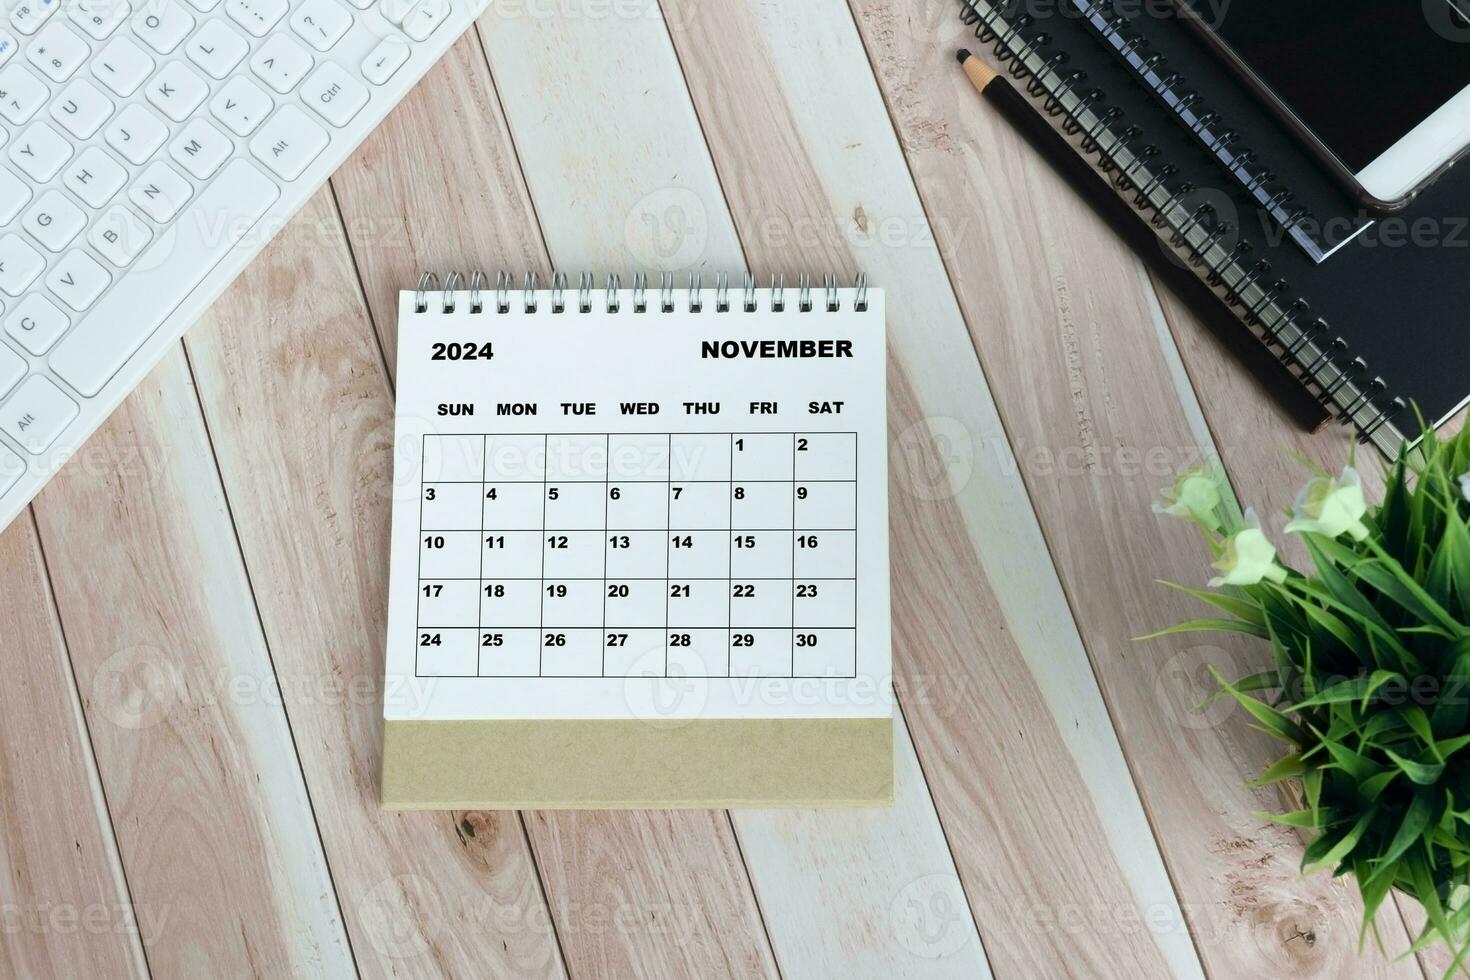 blanco noviembre 2024 calendario en oficina de madera escritorio. foto